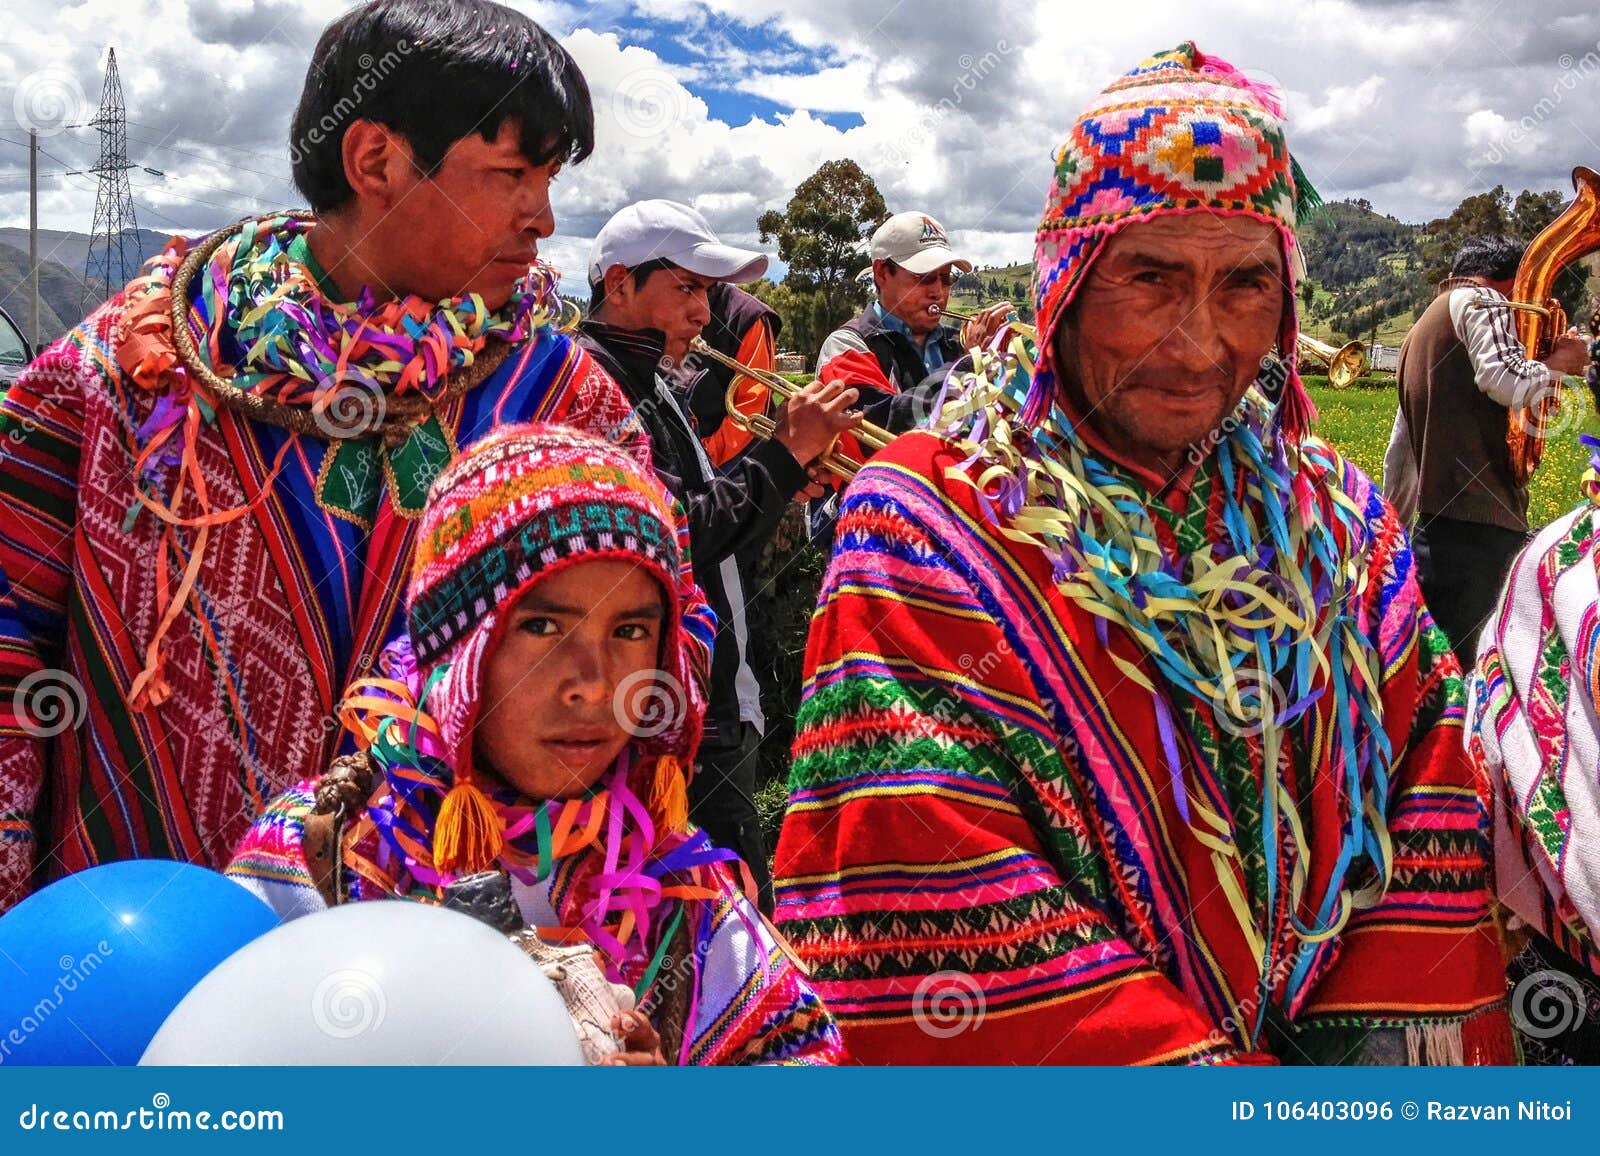 quechua-native-men-peru-traditional-costumes-group-cusco-region-wearing-celebrating-event-local-religious-festival-106403096.jpg